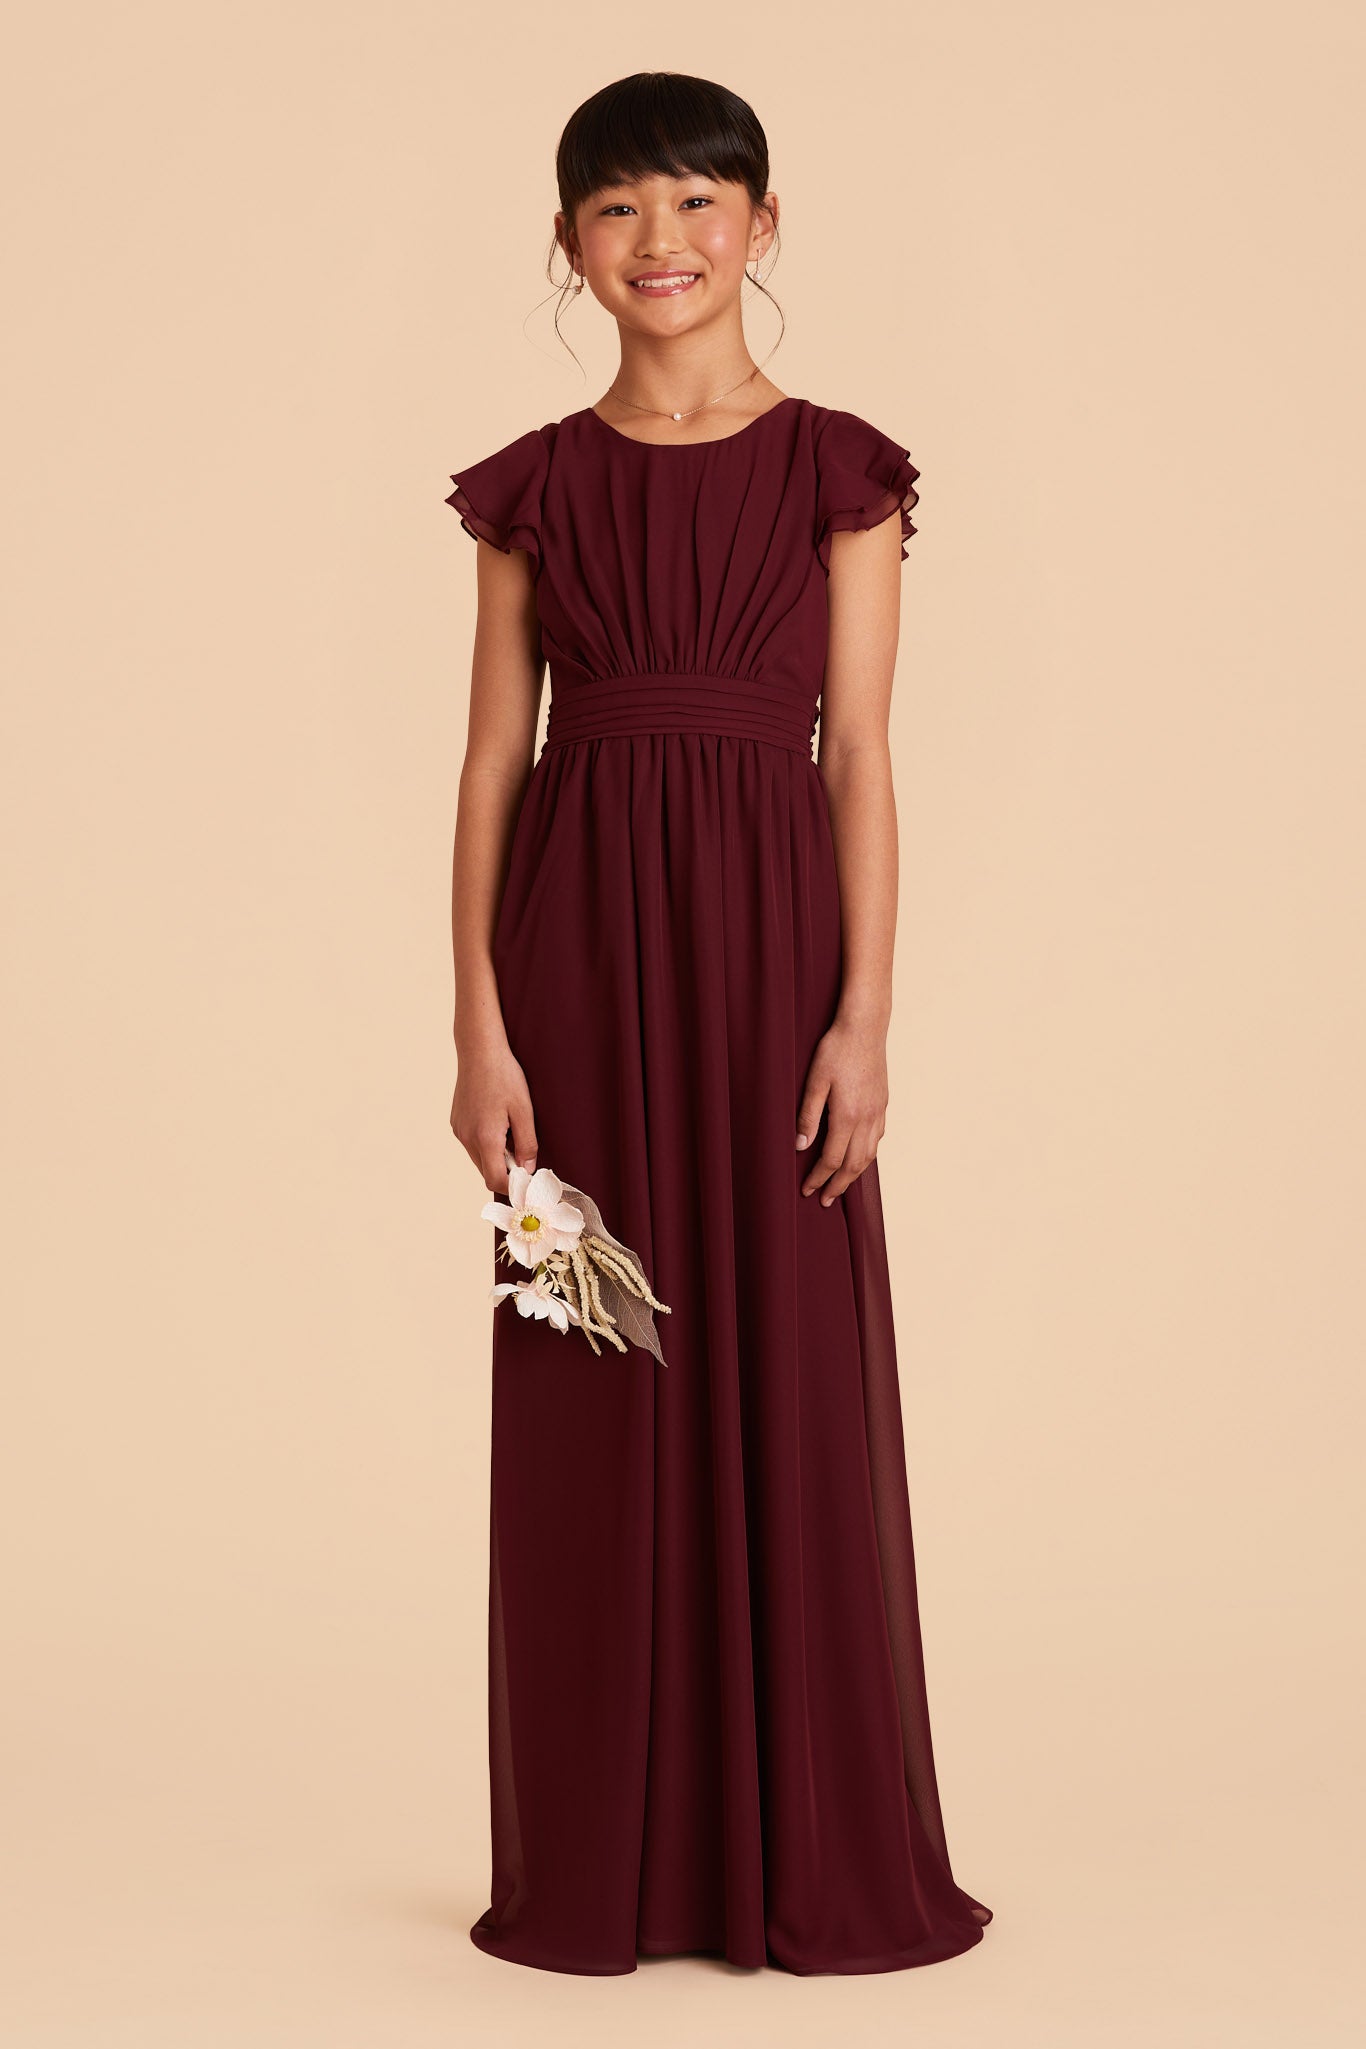 cabernet dark red frilly-sleeved floor length junior bridesmaid dress 